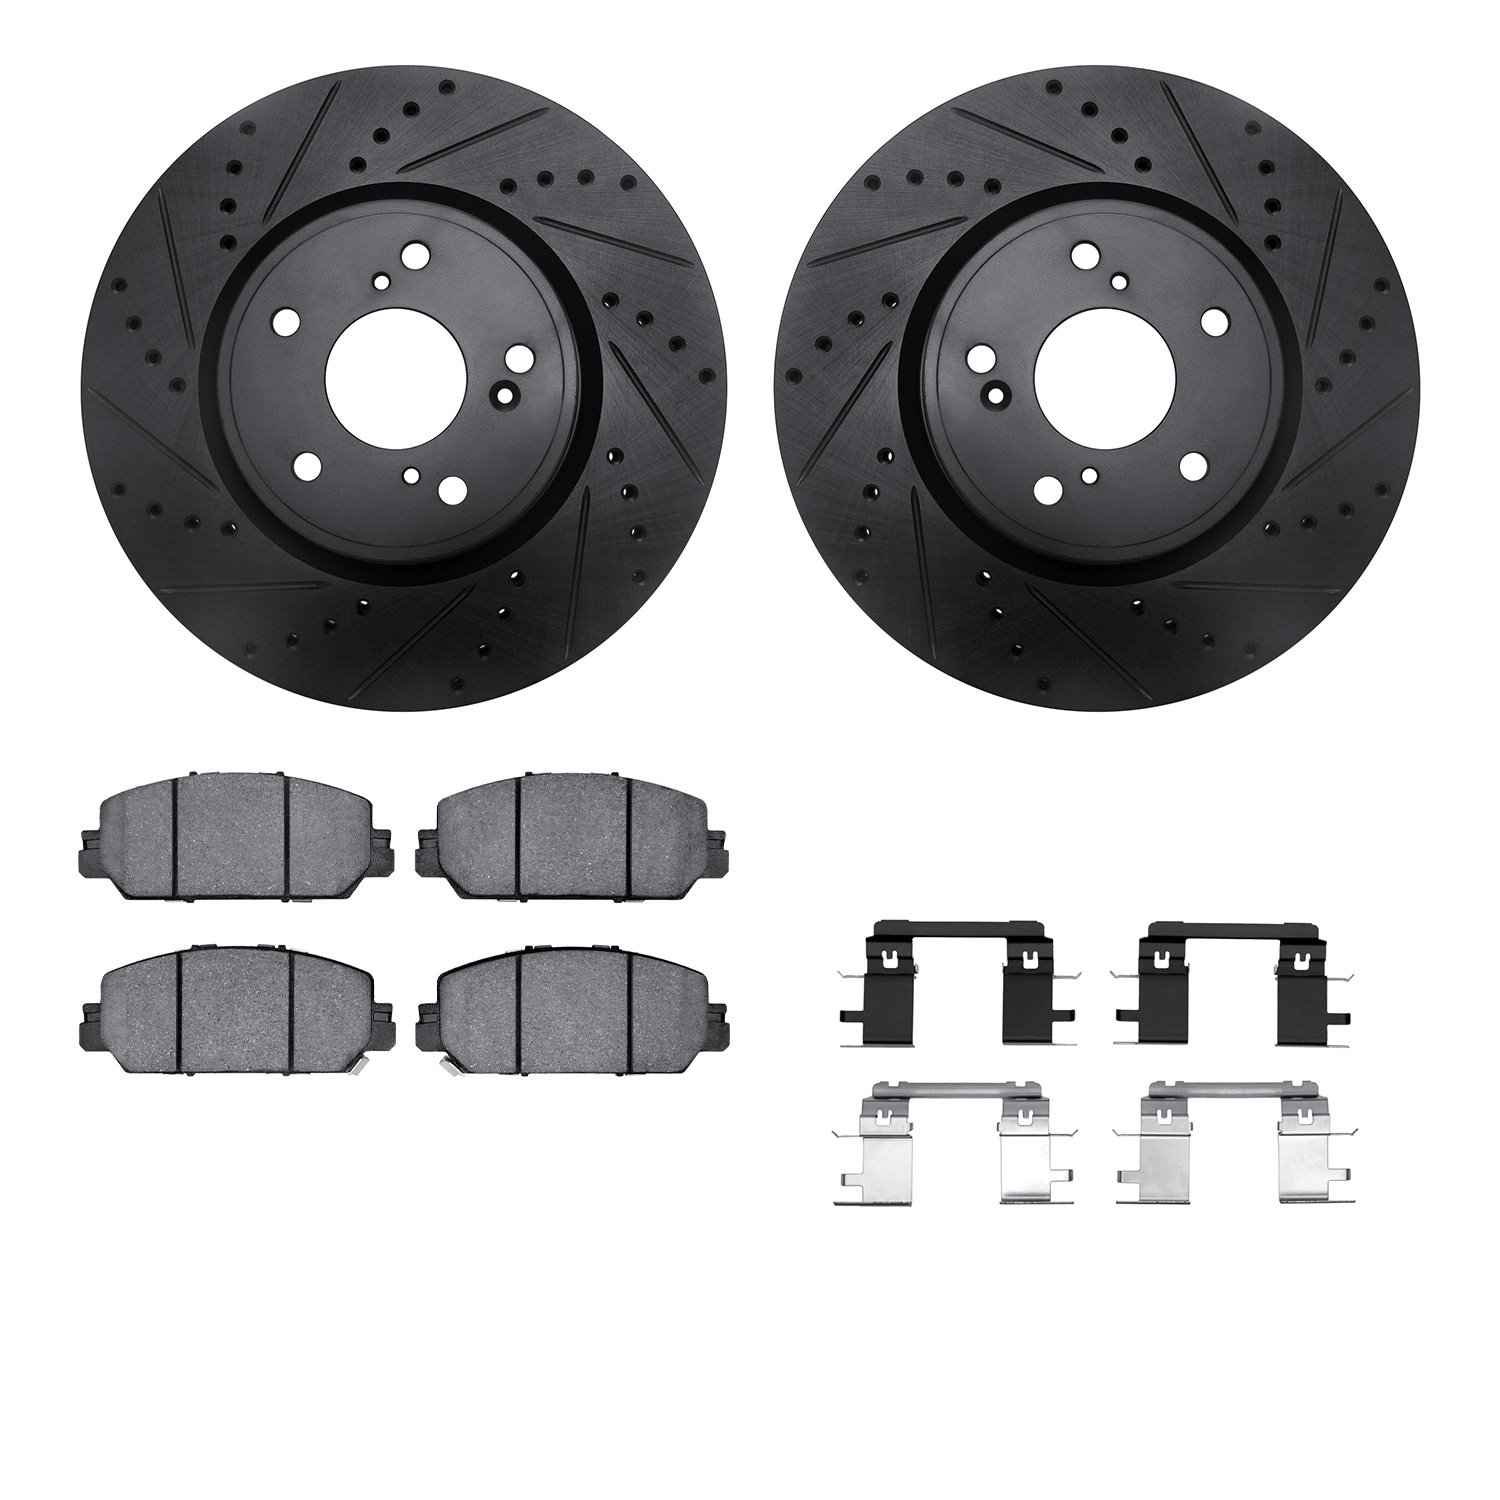 8312-59111 Drilled/Slotted Brake Rotors with 3000-Series Ceramic Brake Pads Kit & Hardware [Black], Fits Select Acura/Honda, Pos